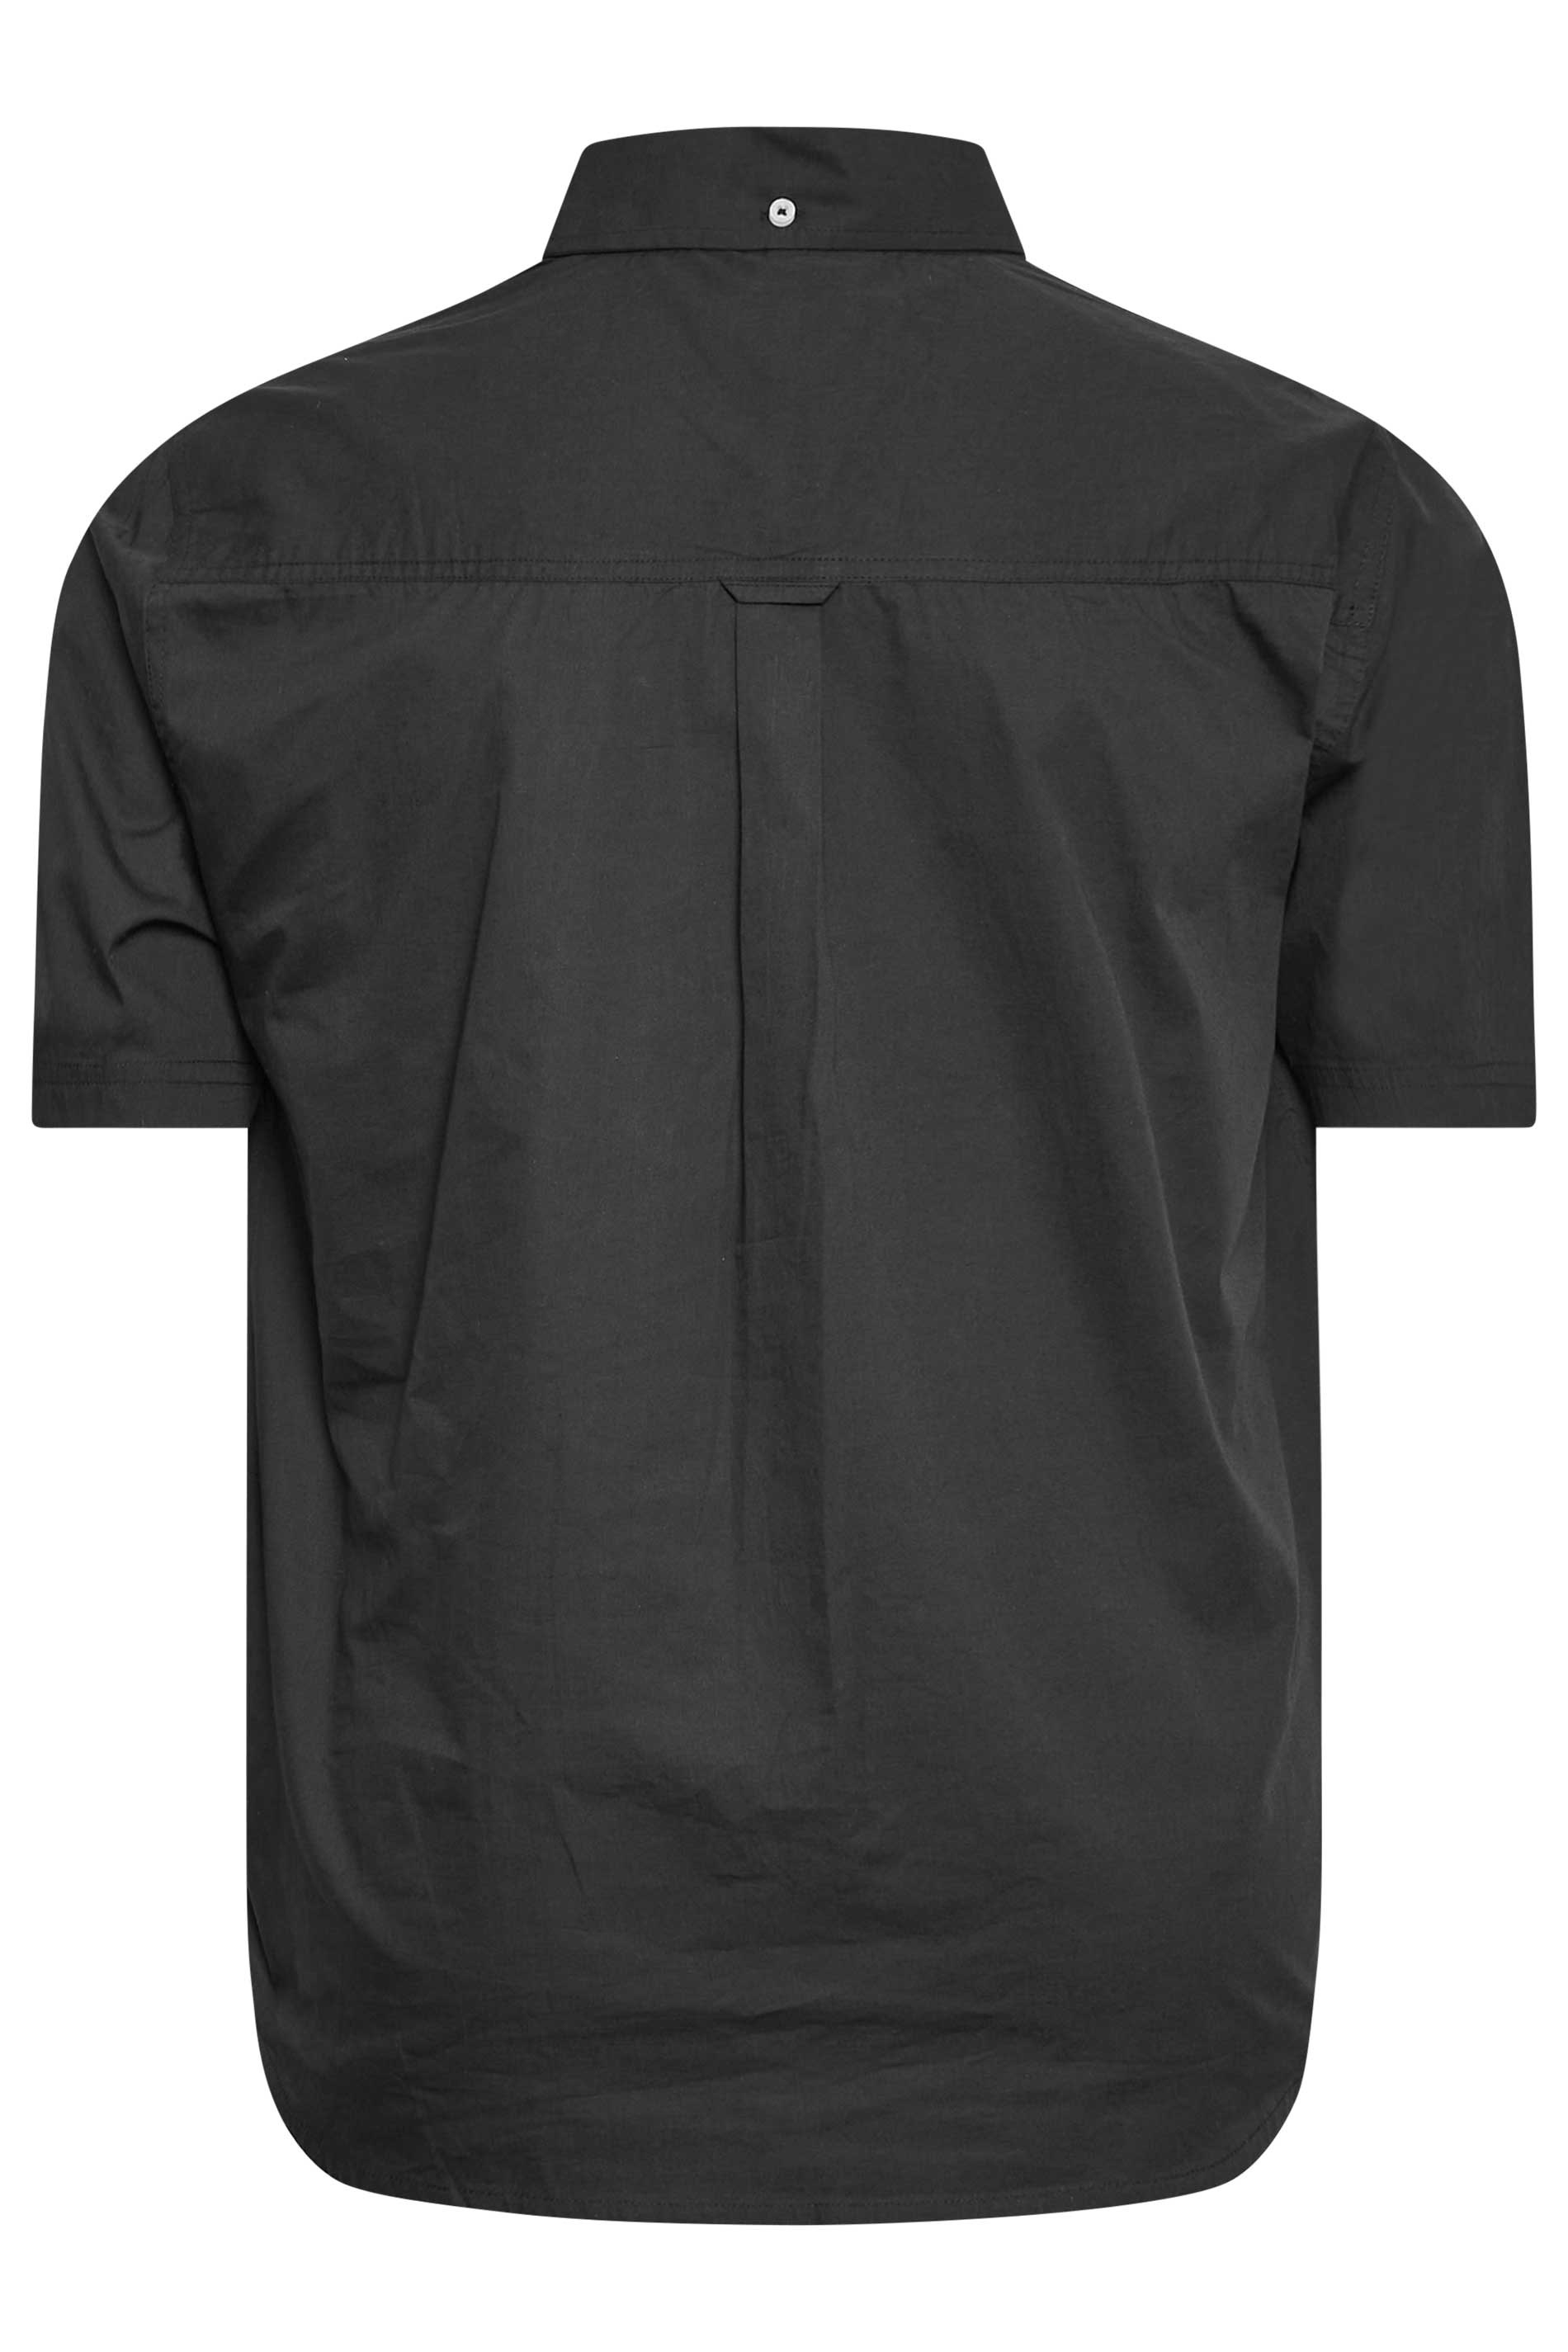 BadRhino Black Cotton Poplin Short Sleeve Shirt